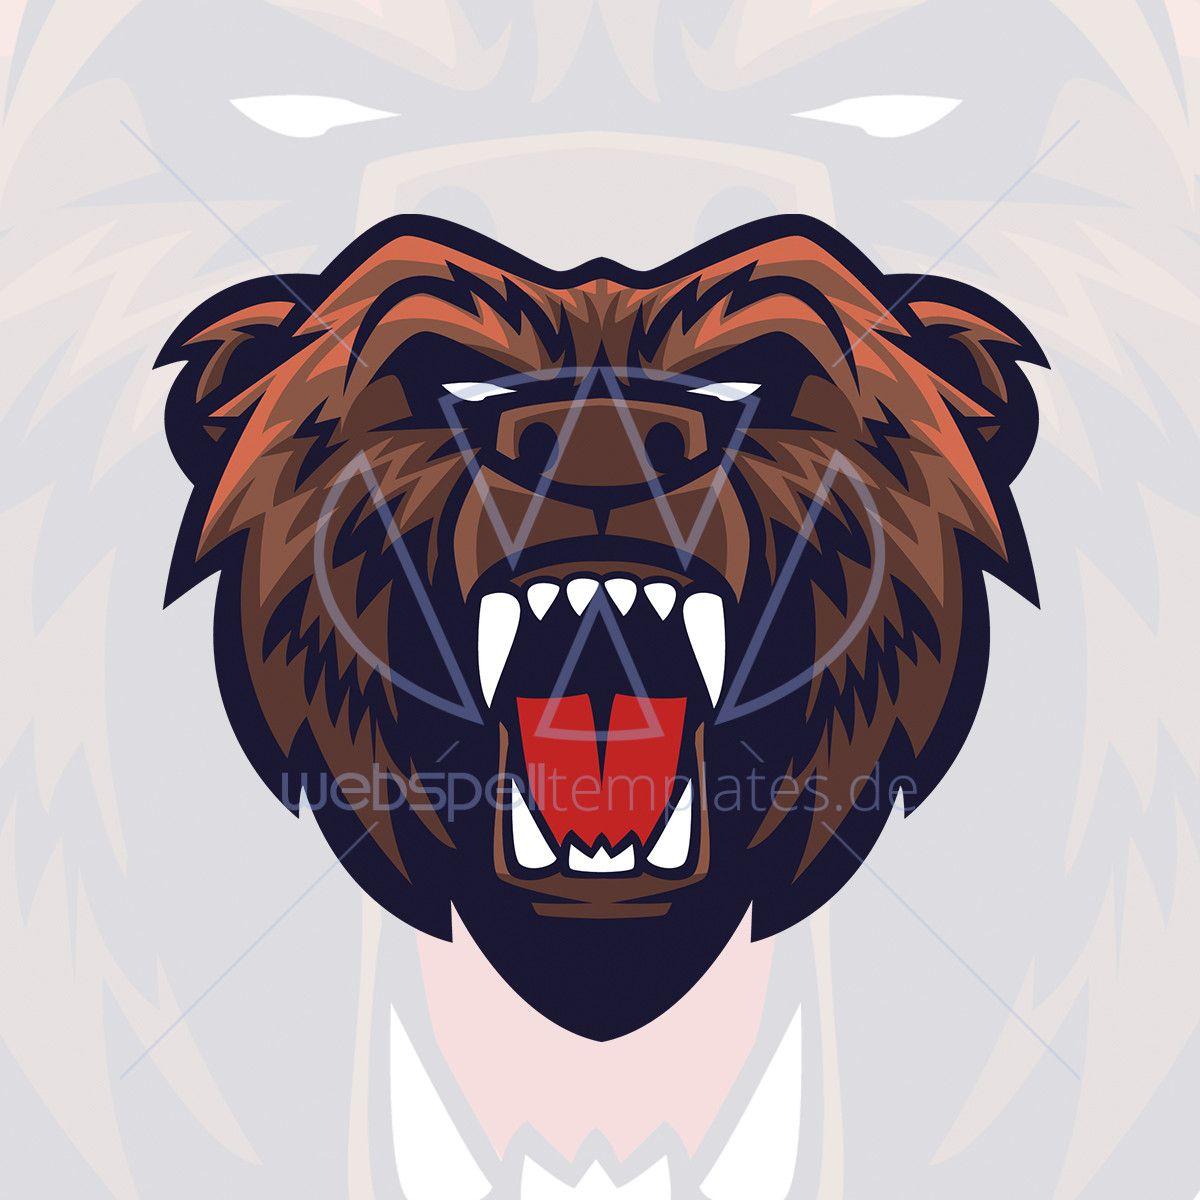 Bear Mascot Logo - Webspelltemplates.de – Webspell TemplatesVector Grizzly Bear Clan ...